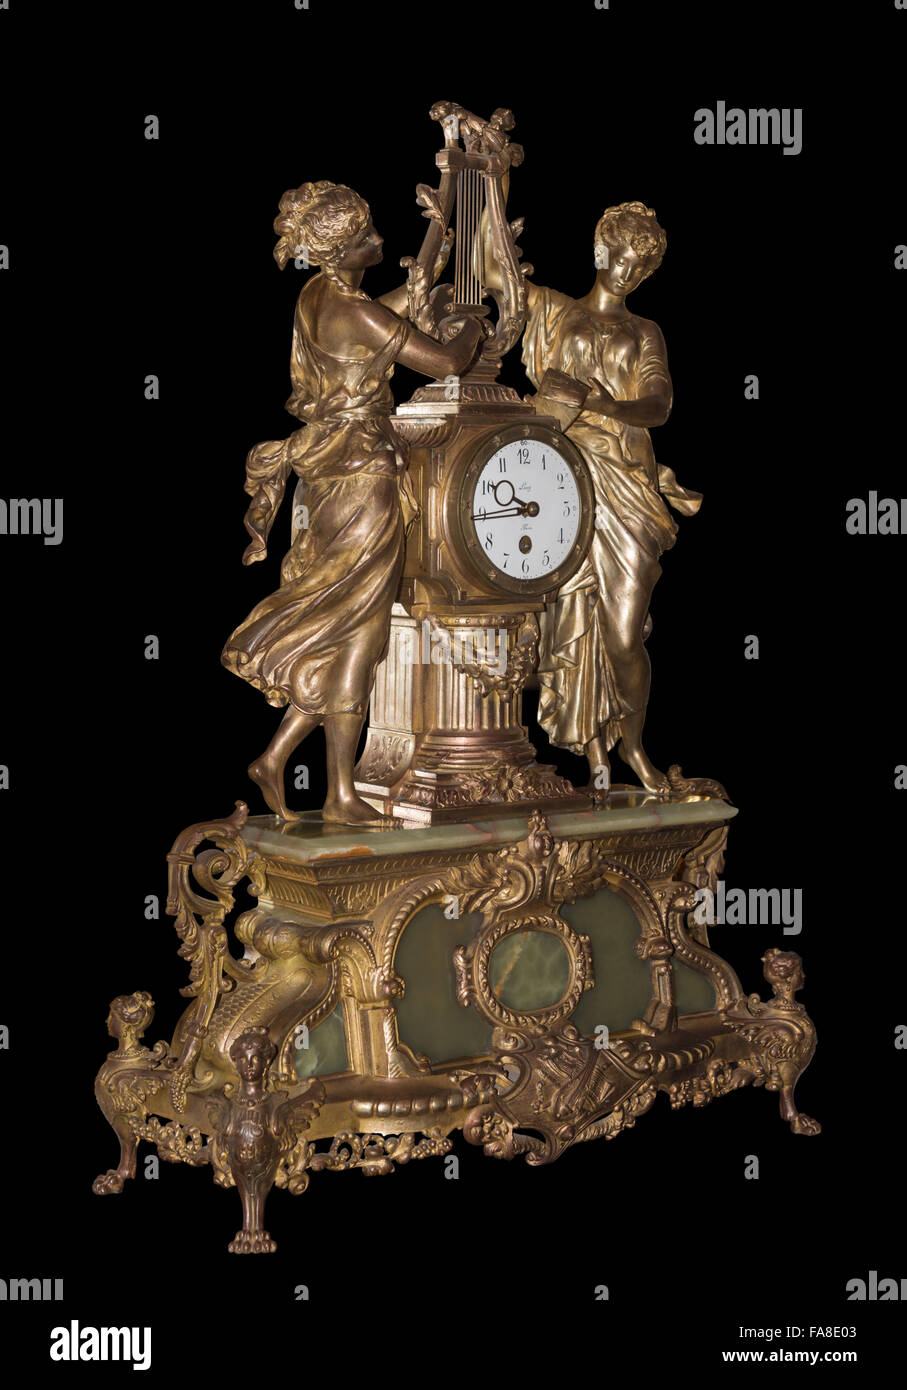 Isolated antique clock Stock Photo